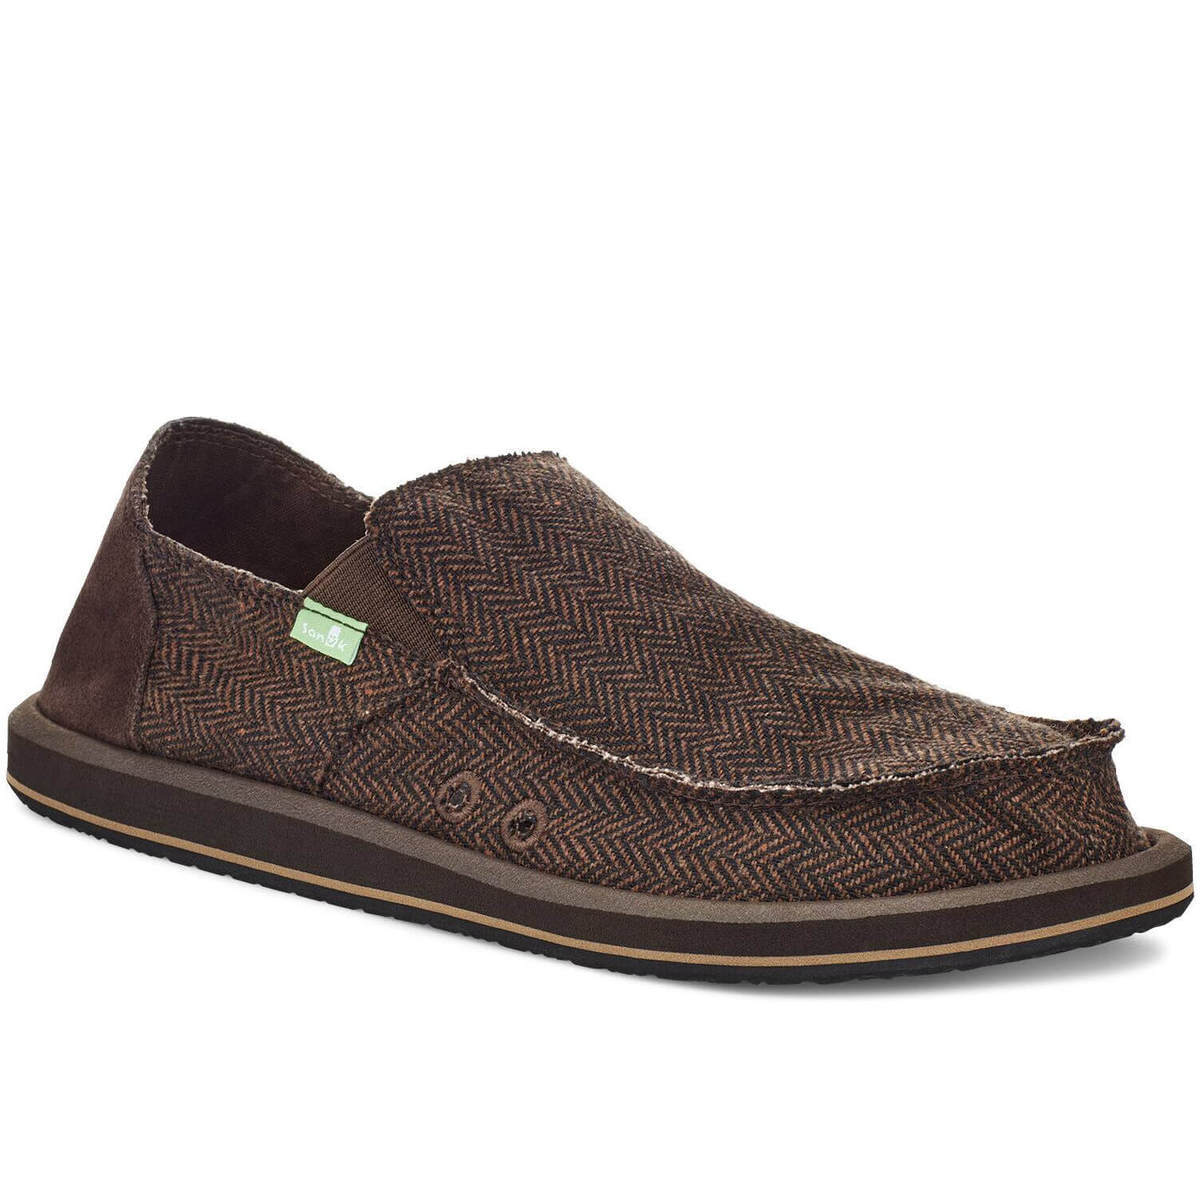 Sanuk Men's Vagabond Tweed Casual Shoes - Brown - Size 12 - Brown 12 ...